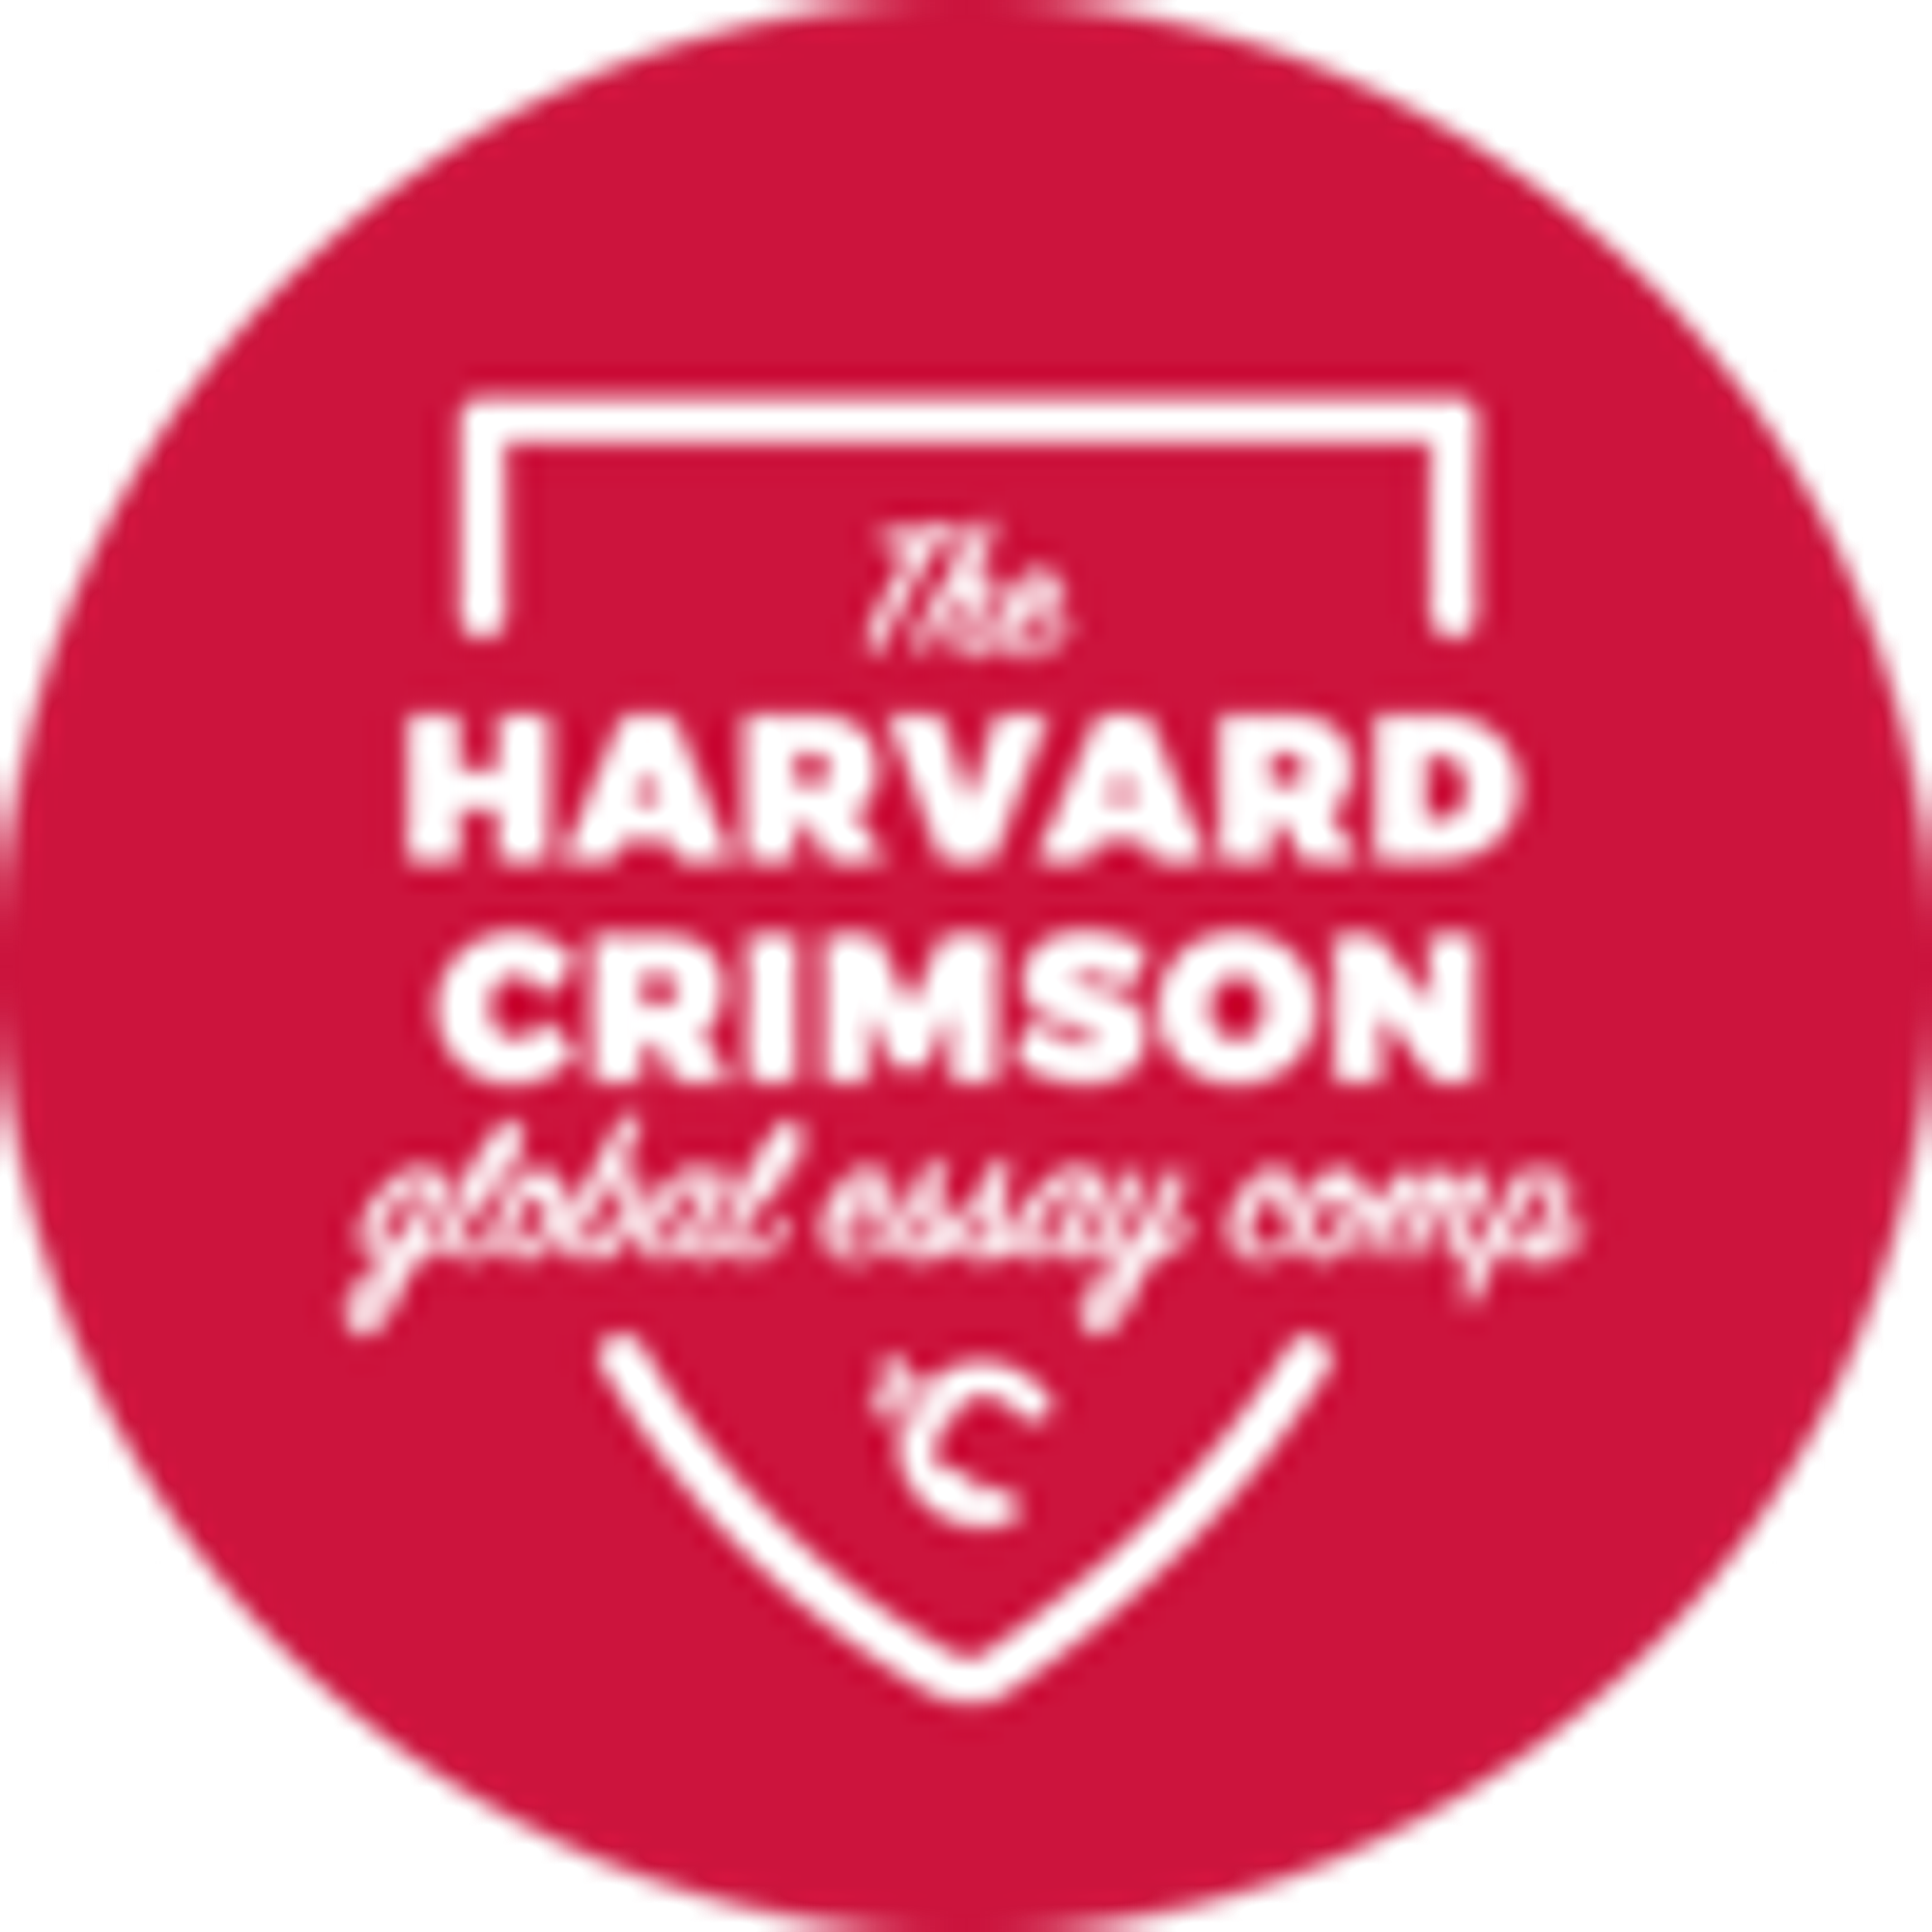 The Harvard Crimson Global Essay Competition